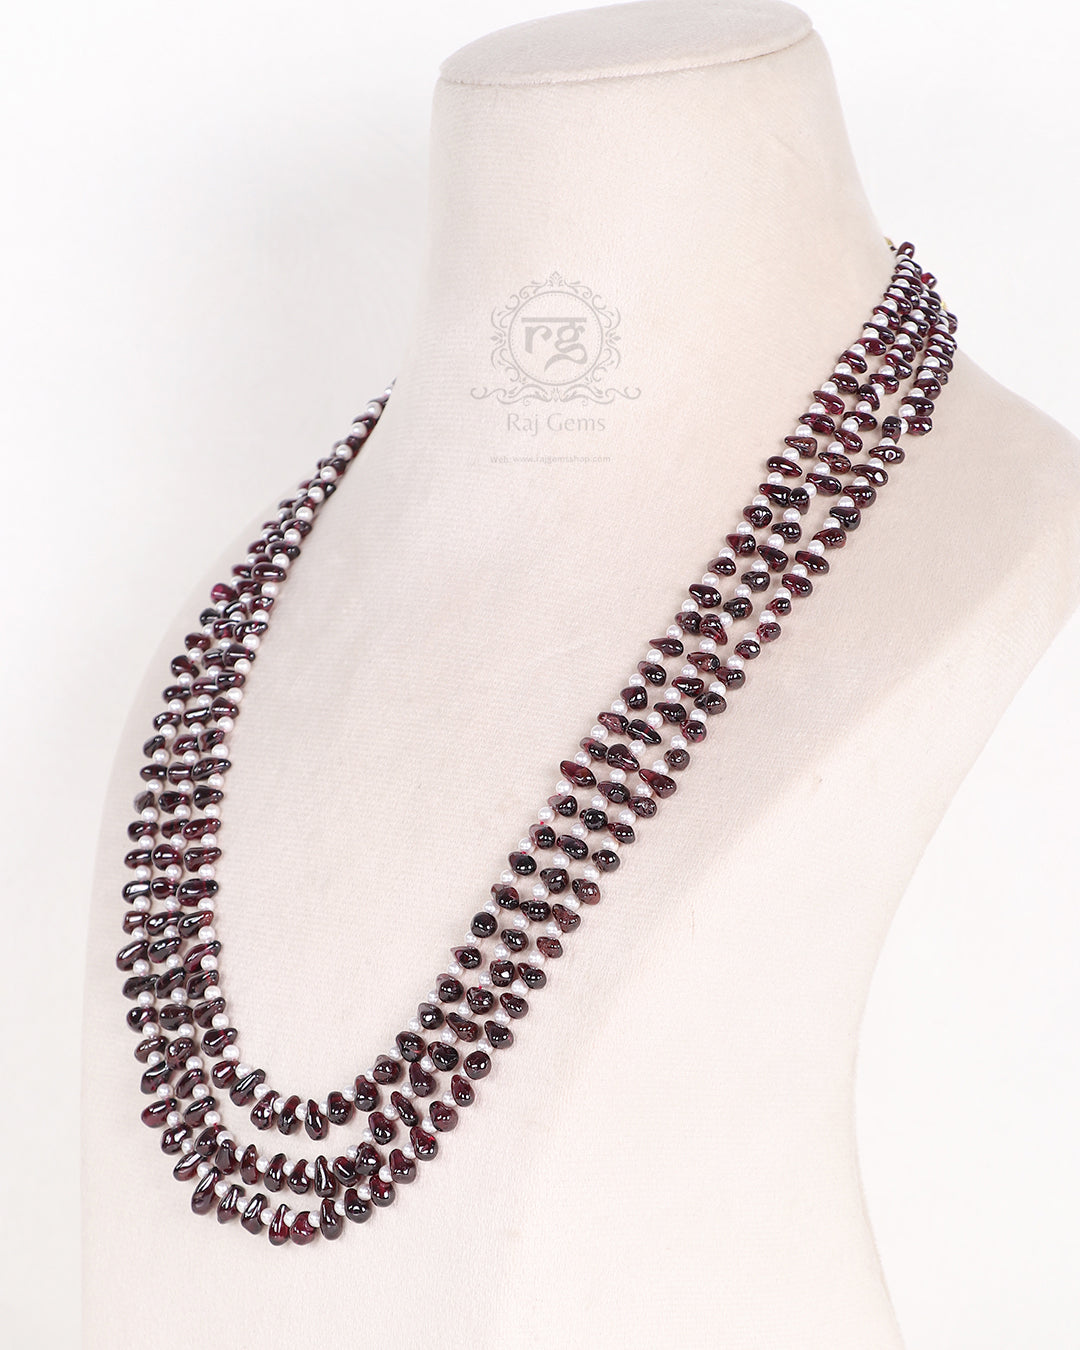 Natural Garnet Gemstone Beads Necklace Jewelry